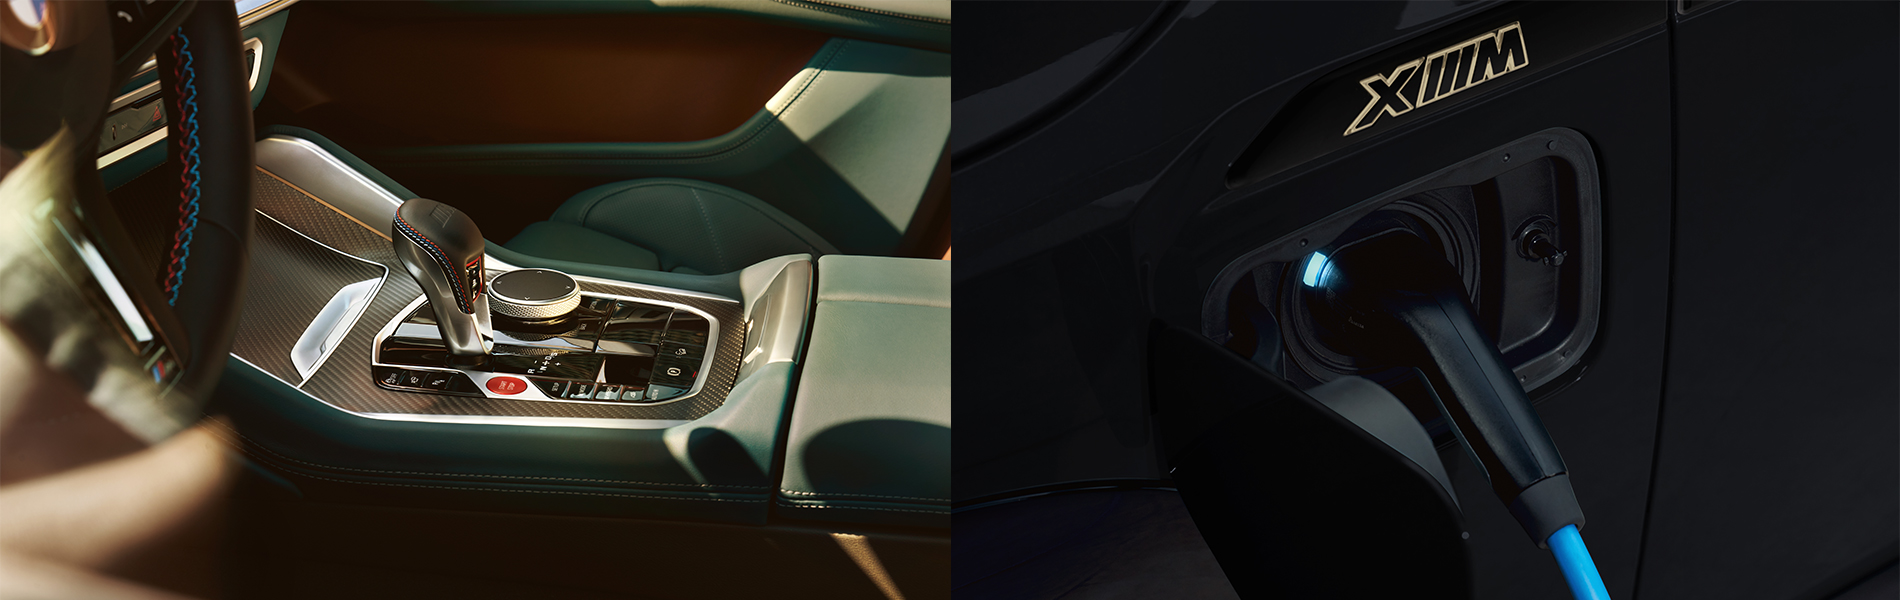 BMW XM Interior shot & Exterior Charging shot.